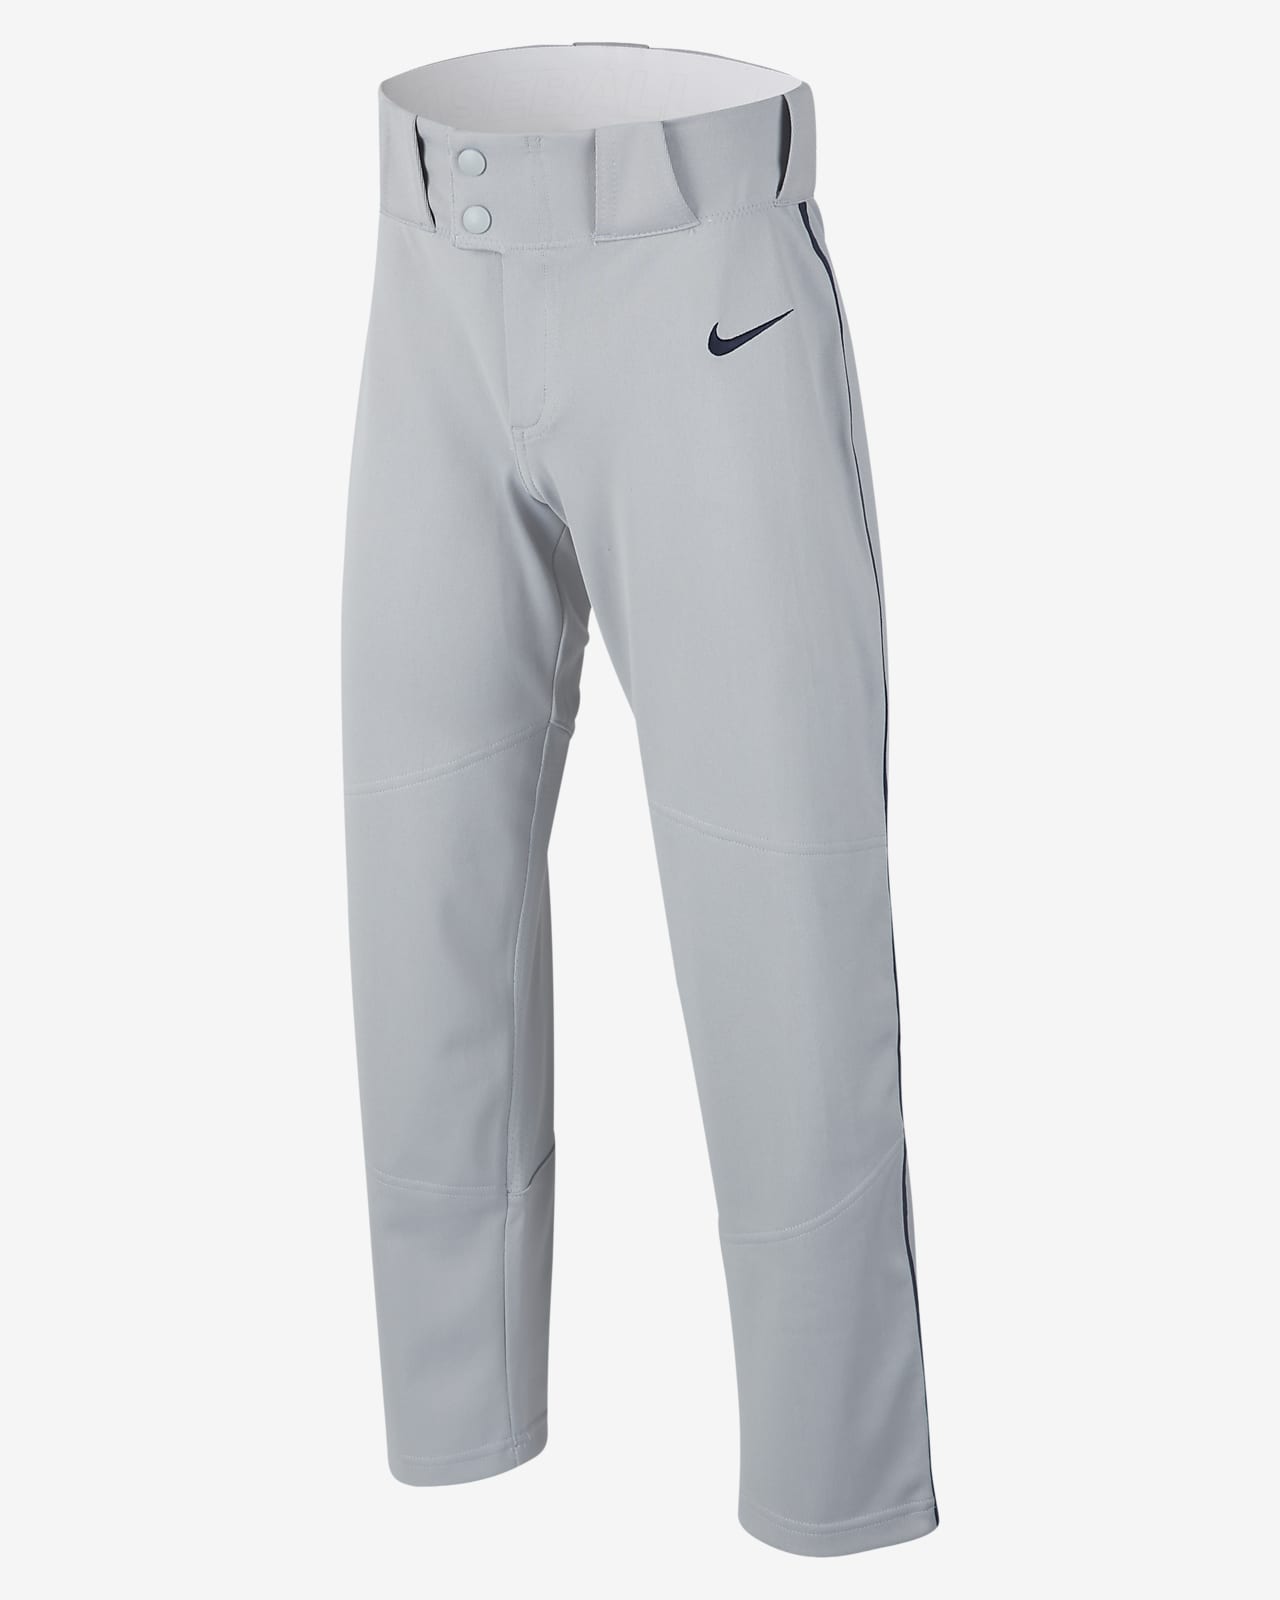 Nike Vapor Select Big Kids' (Boys') Baseball Pants.